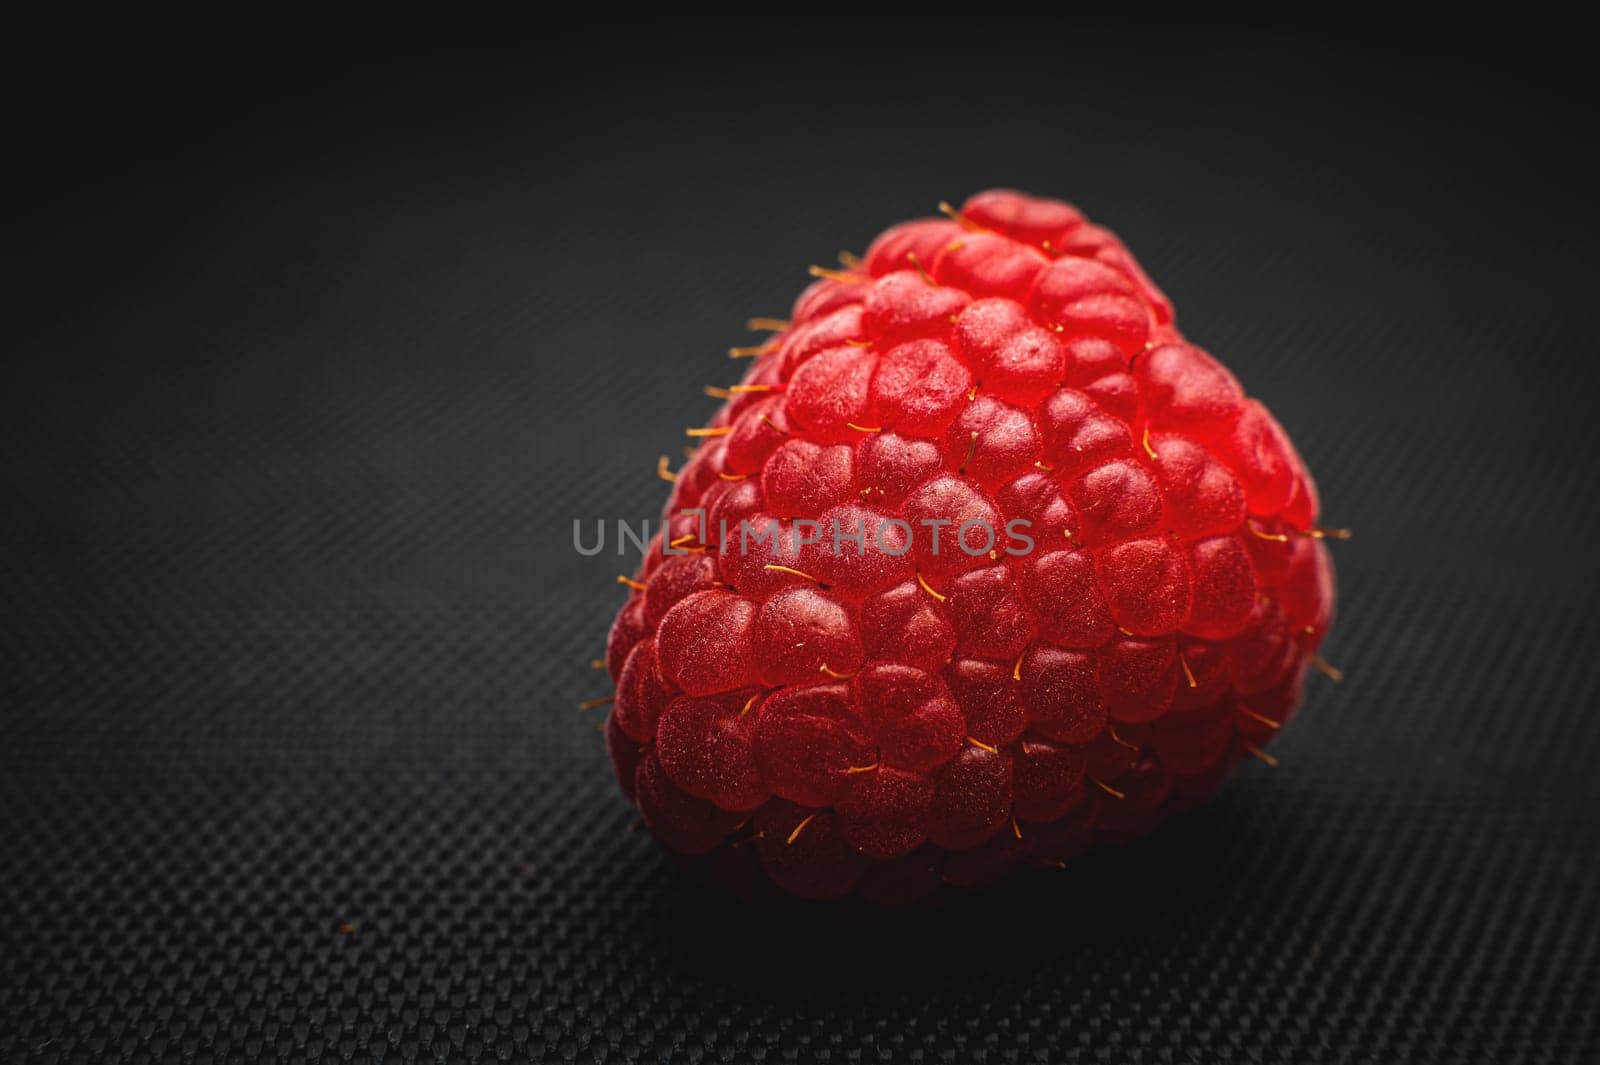 One red raspberry on a black background macro shot by yanik88